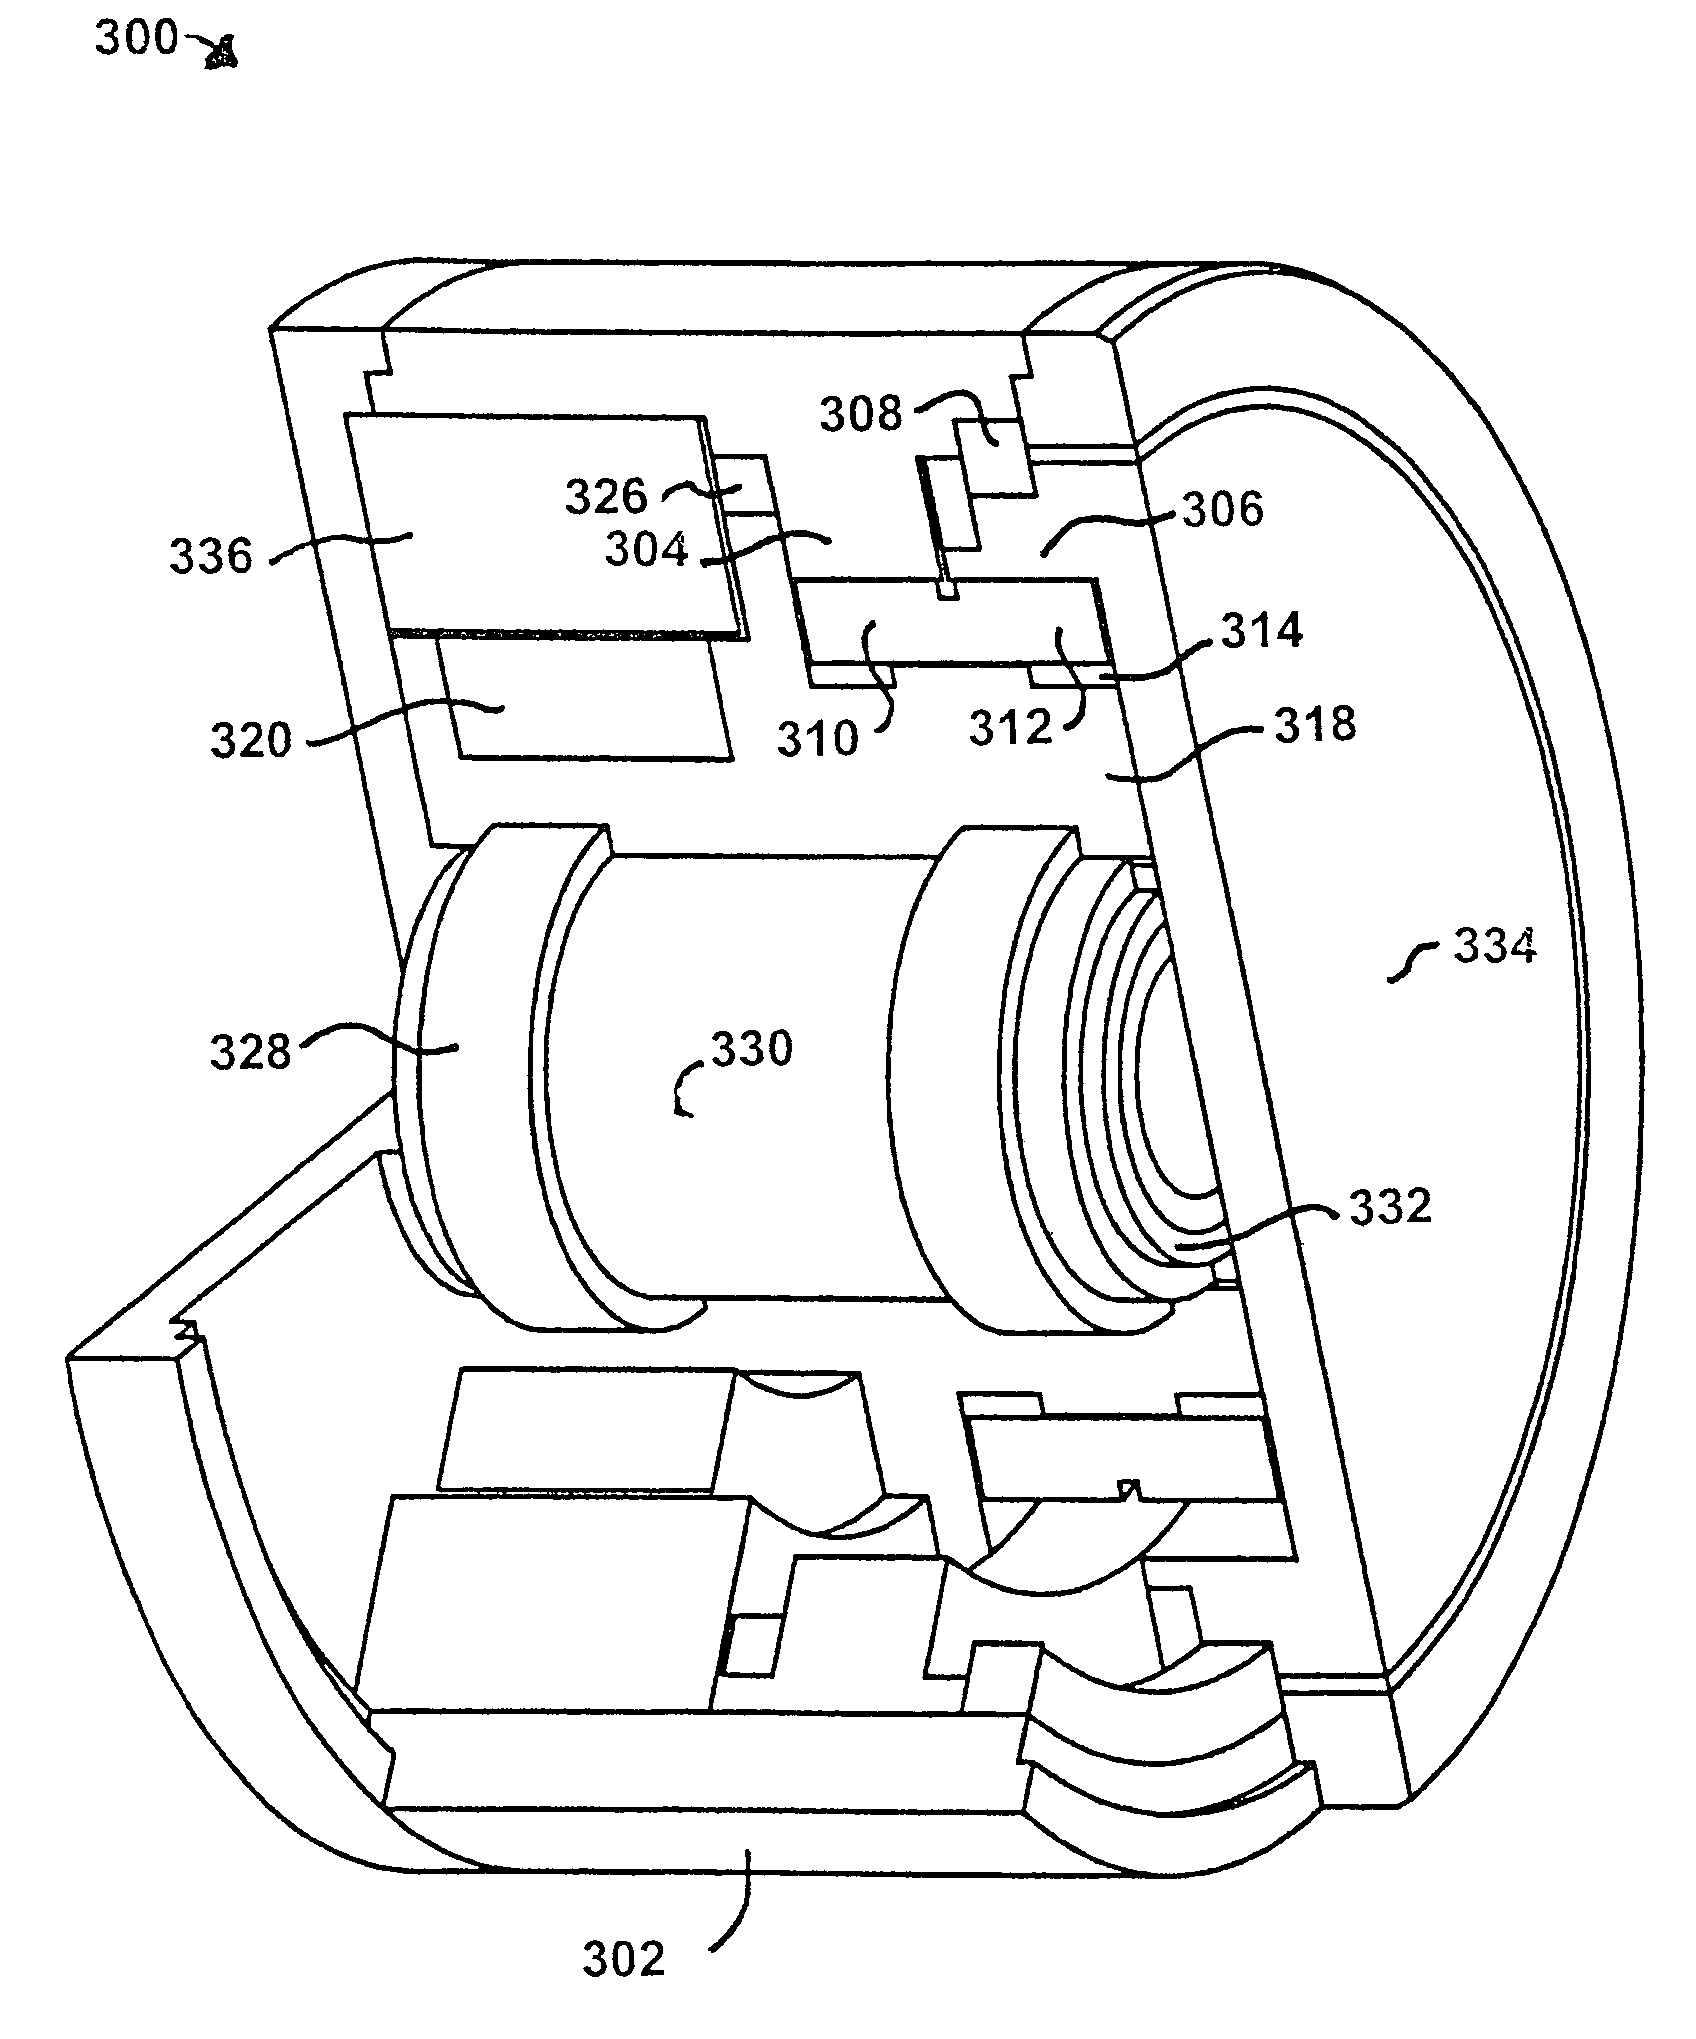 Standardized rotary actuator